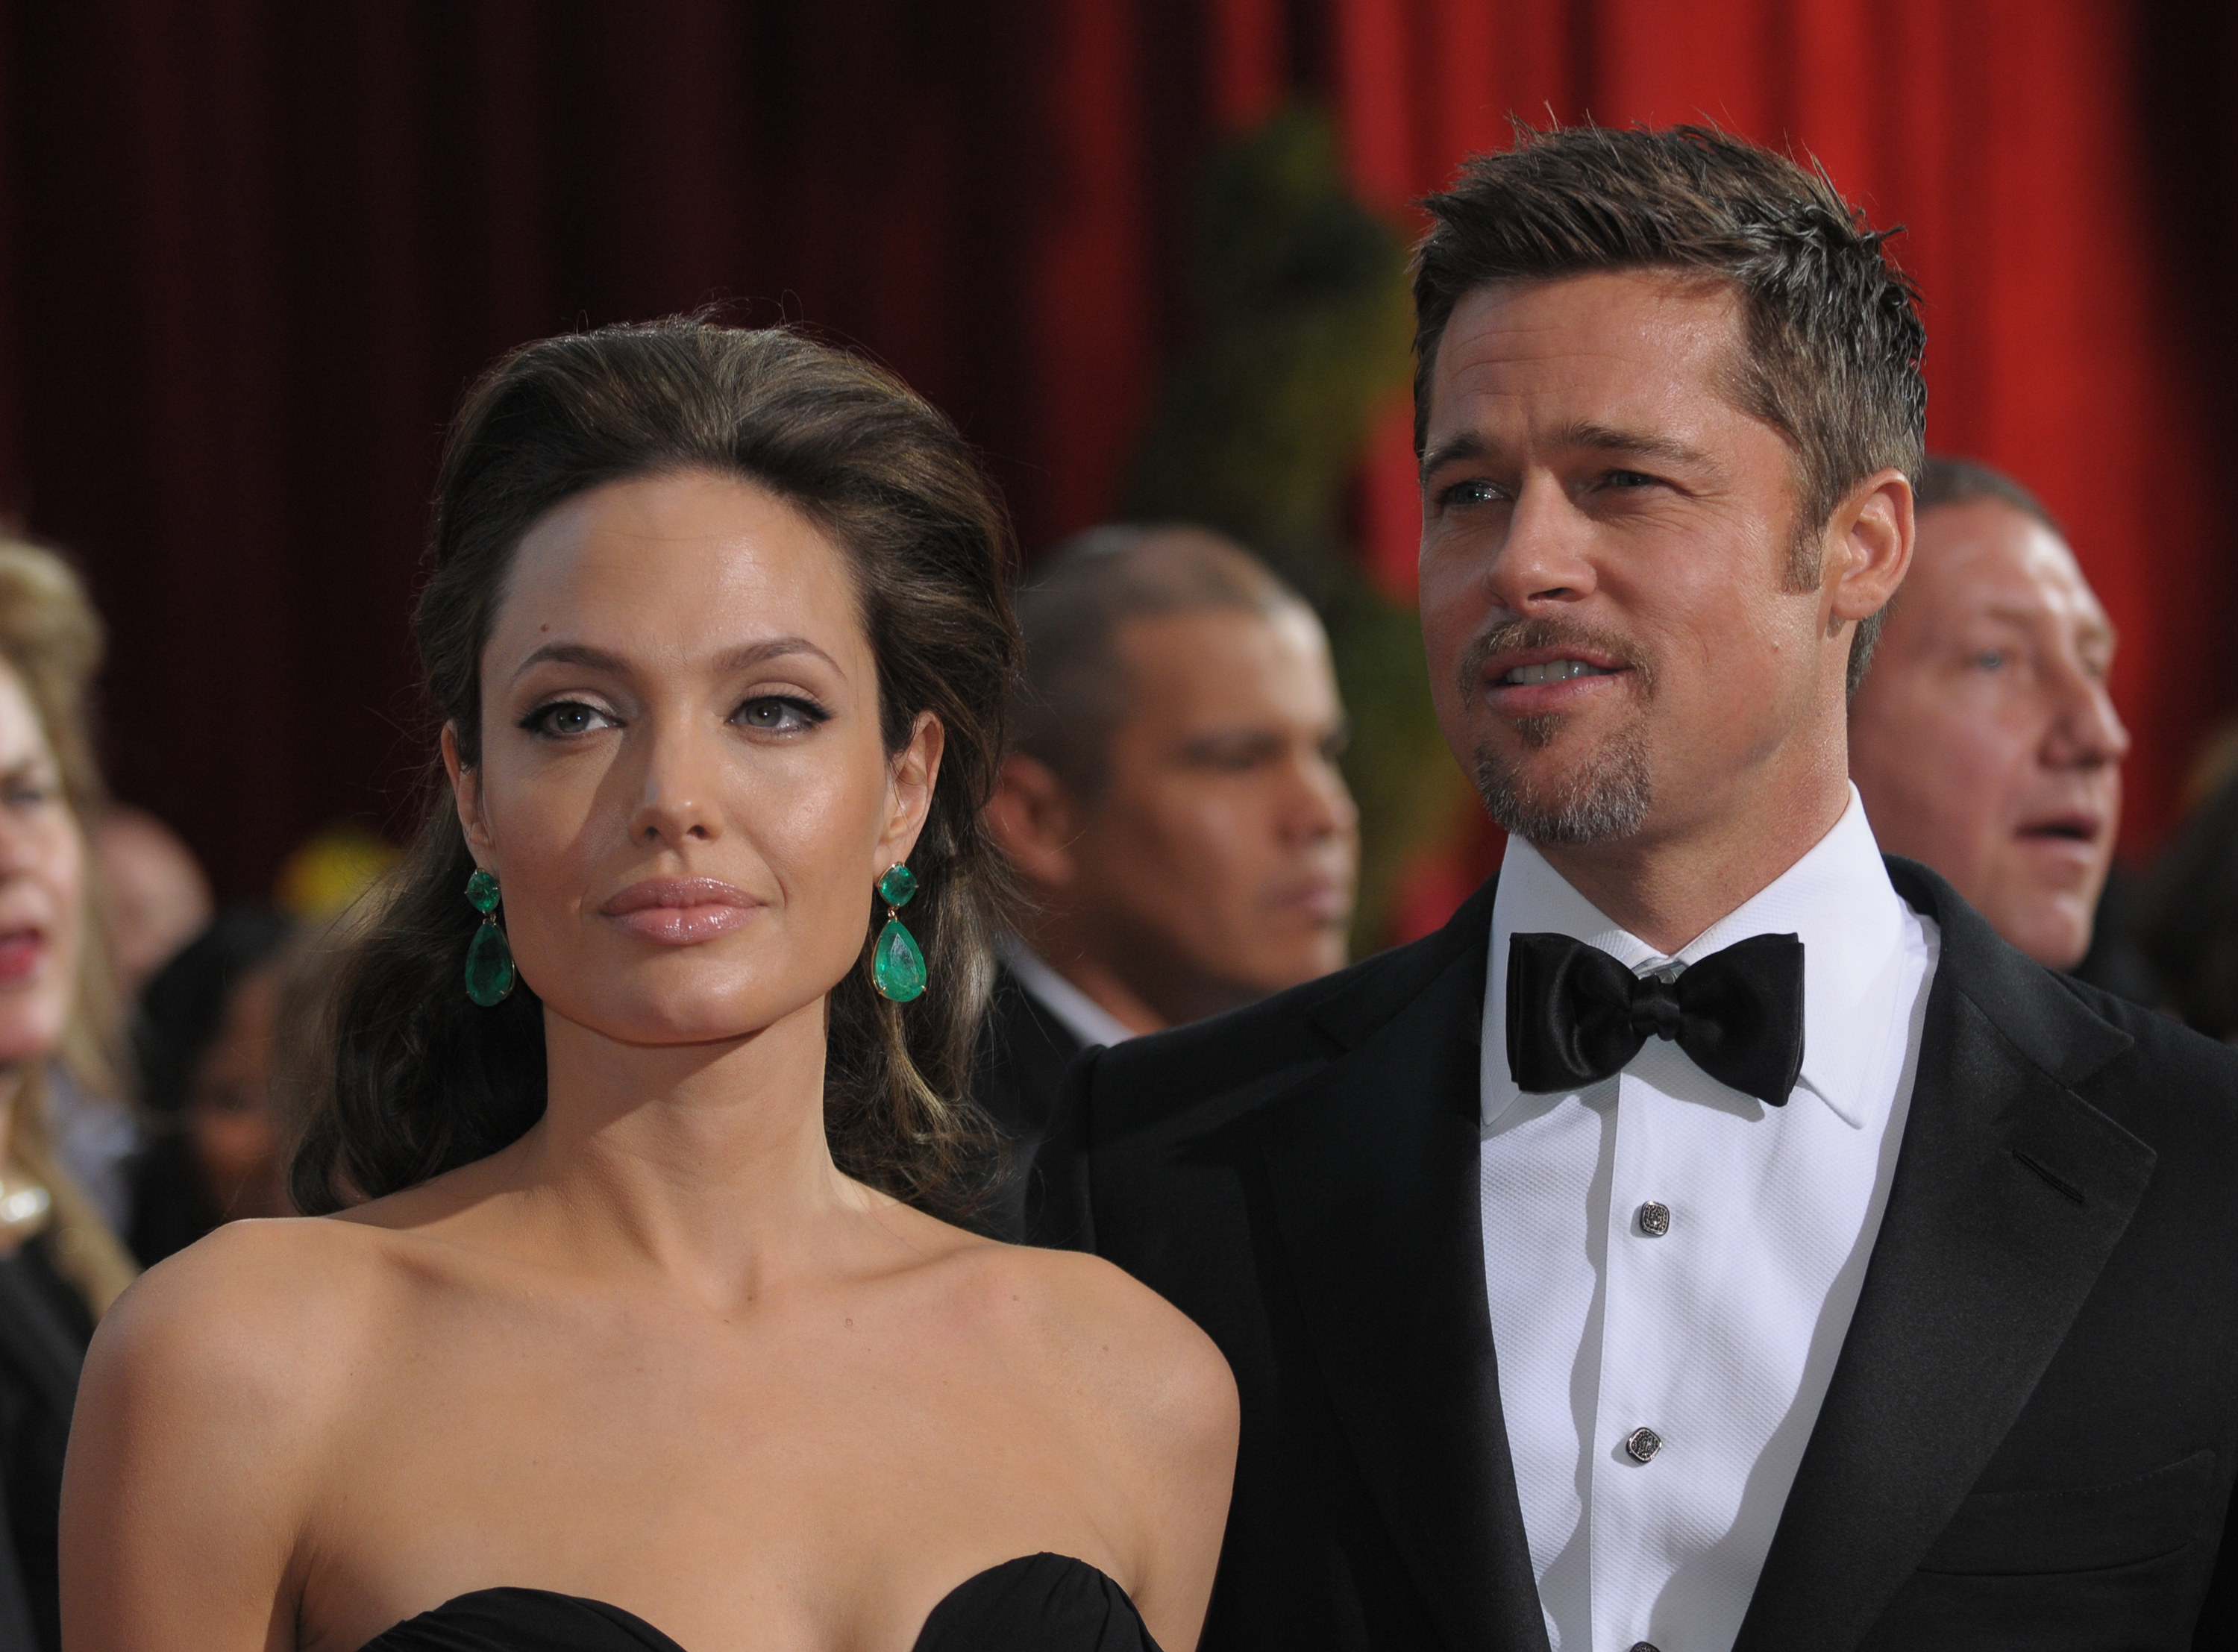 Angelina Jolie and Brad Pitt at an award show in 2009